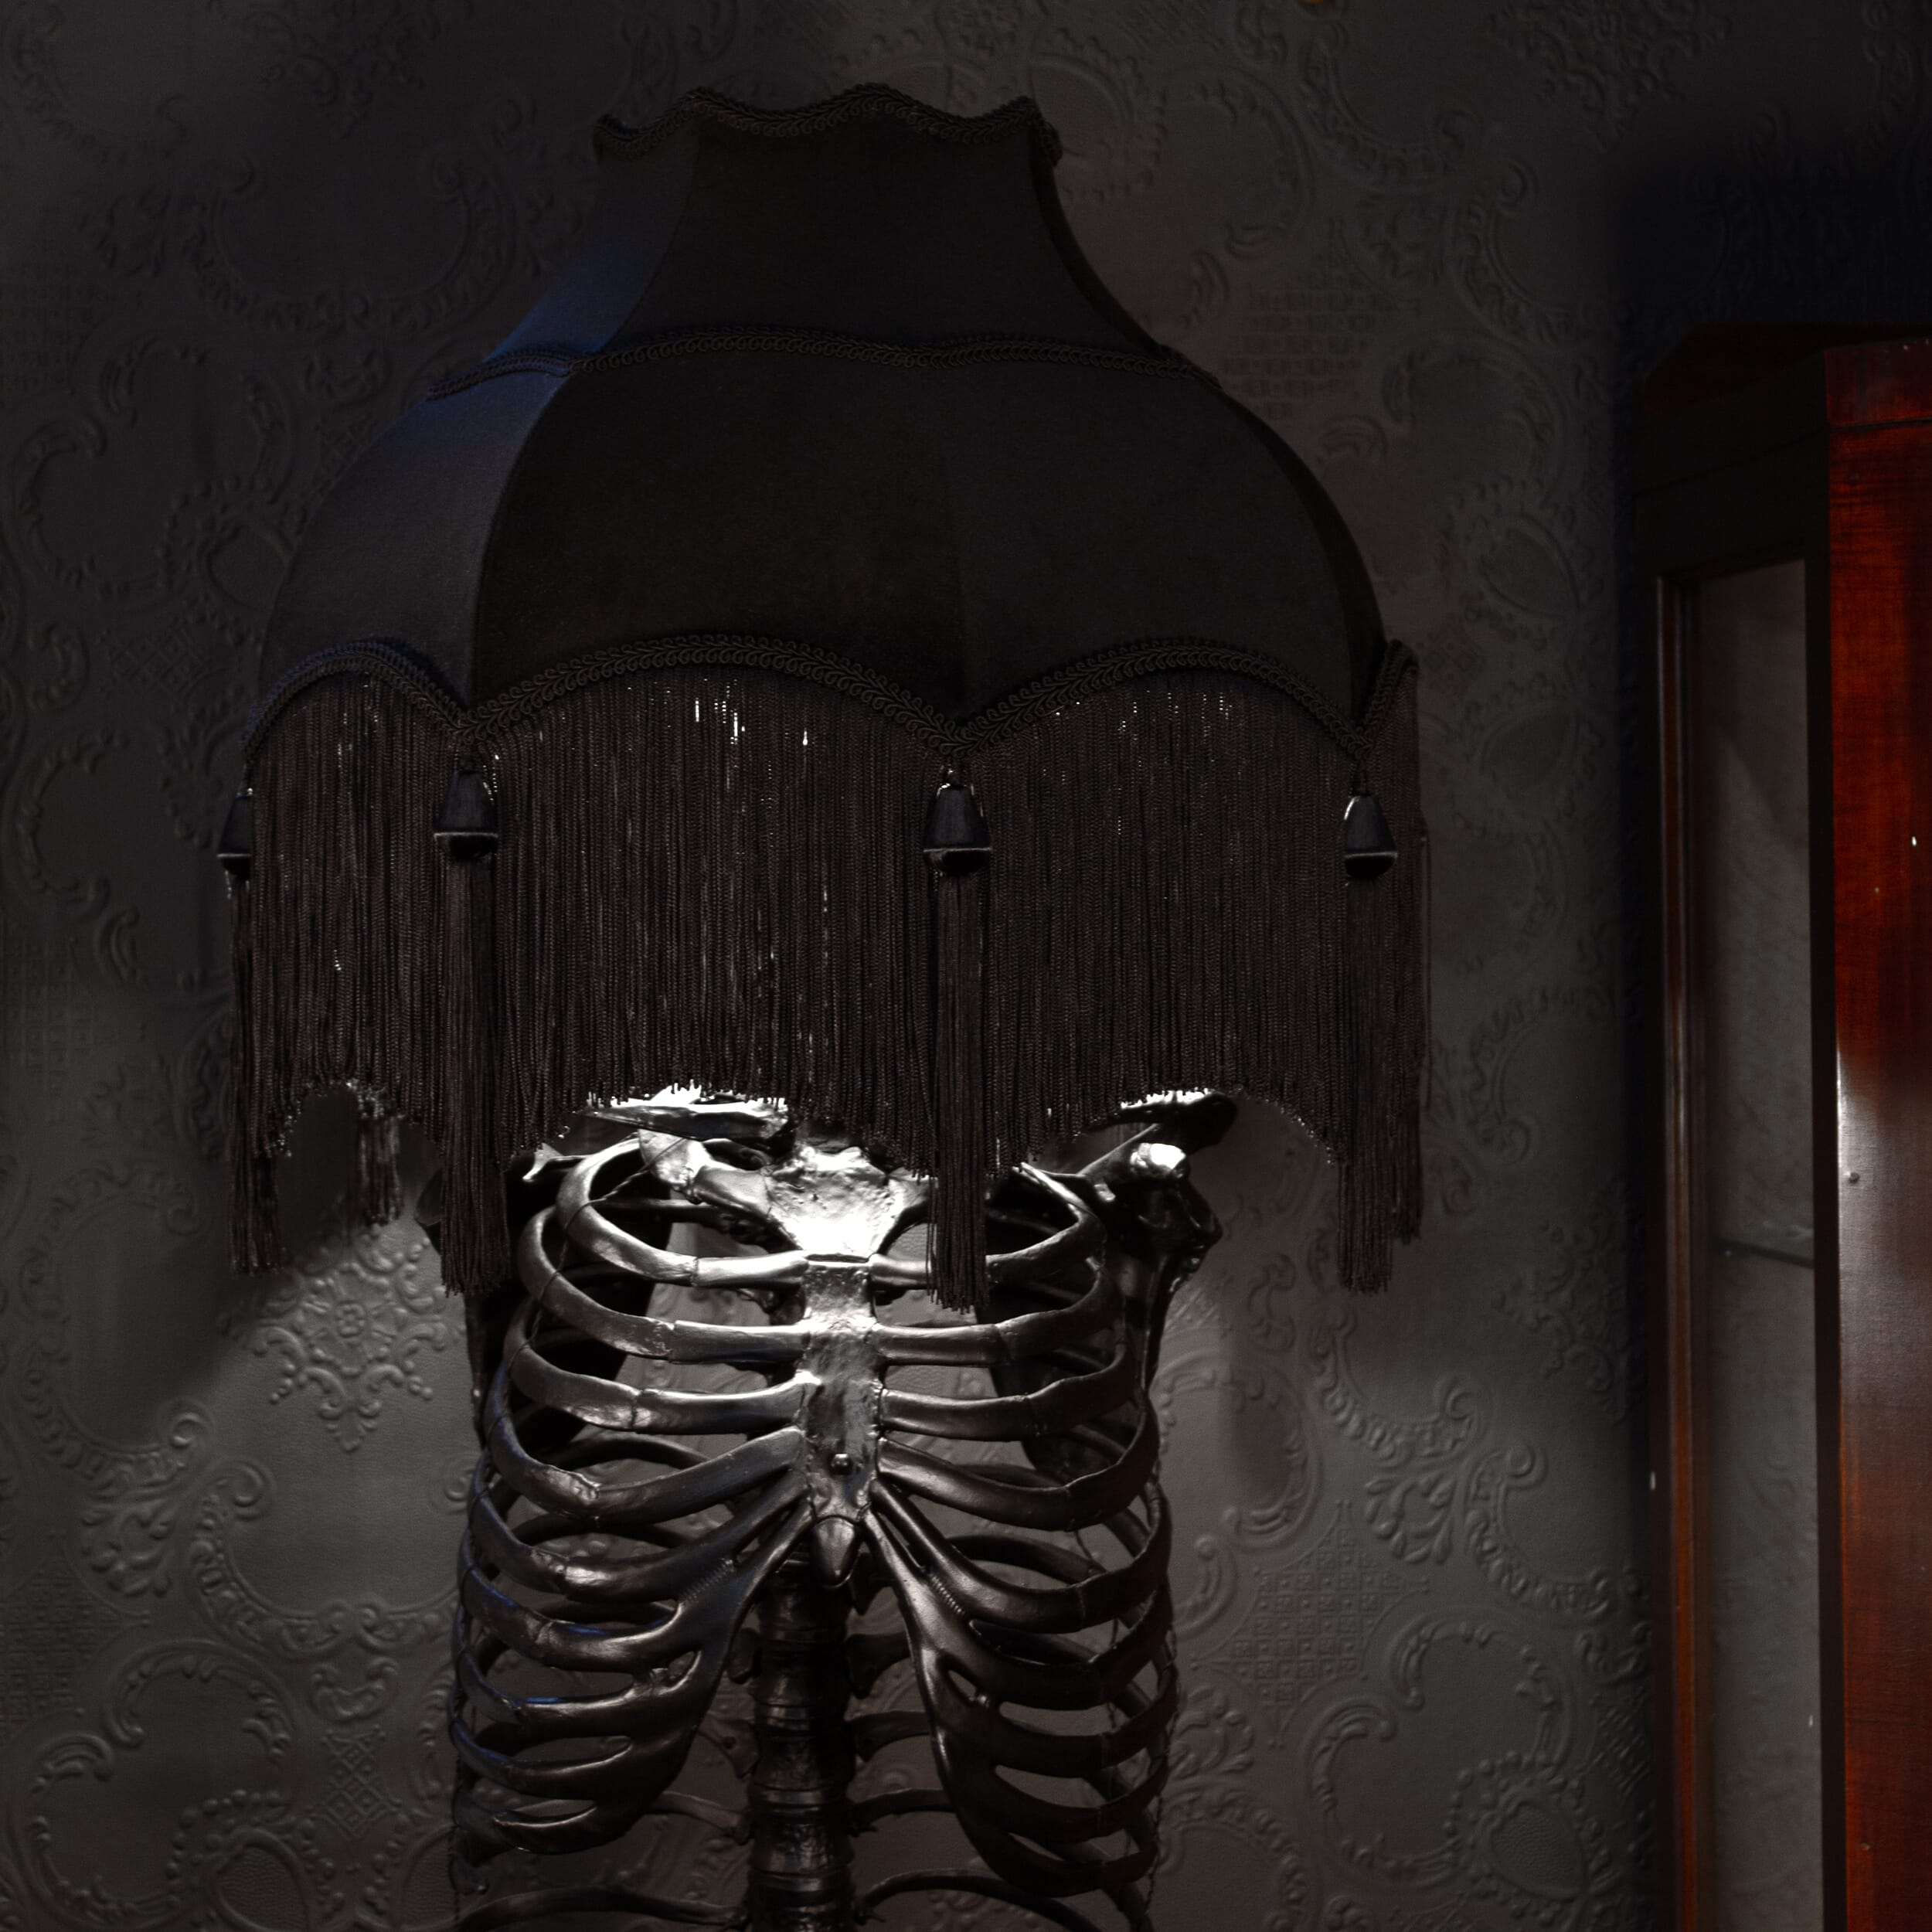 The Skeleton Floor Lamp - Drusilla Baroque Edition by The Blackened Teeth